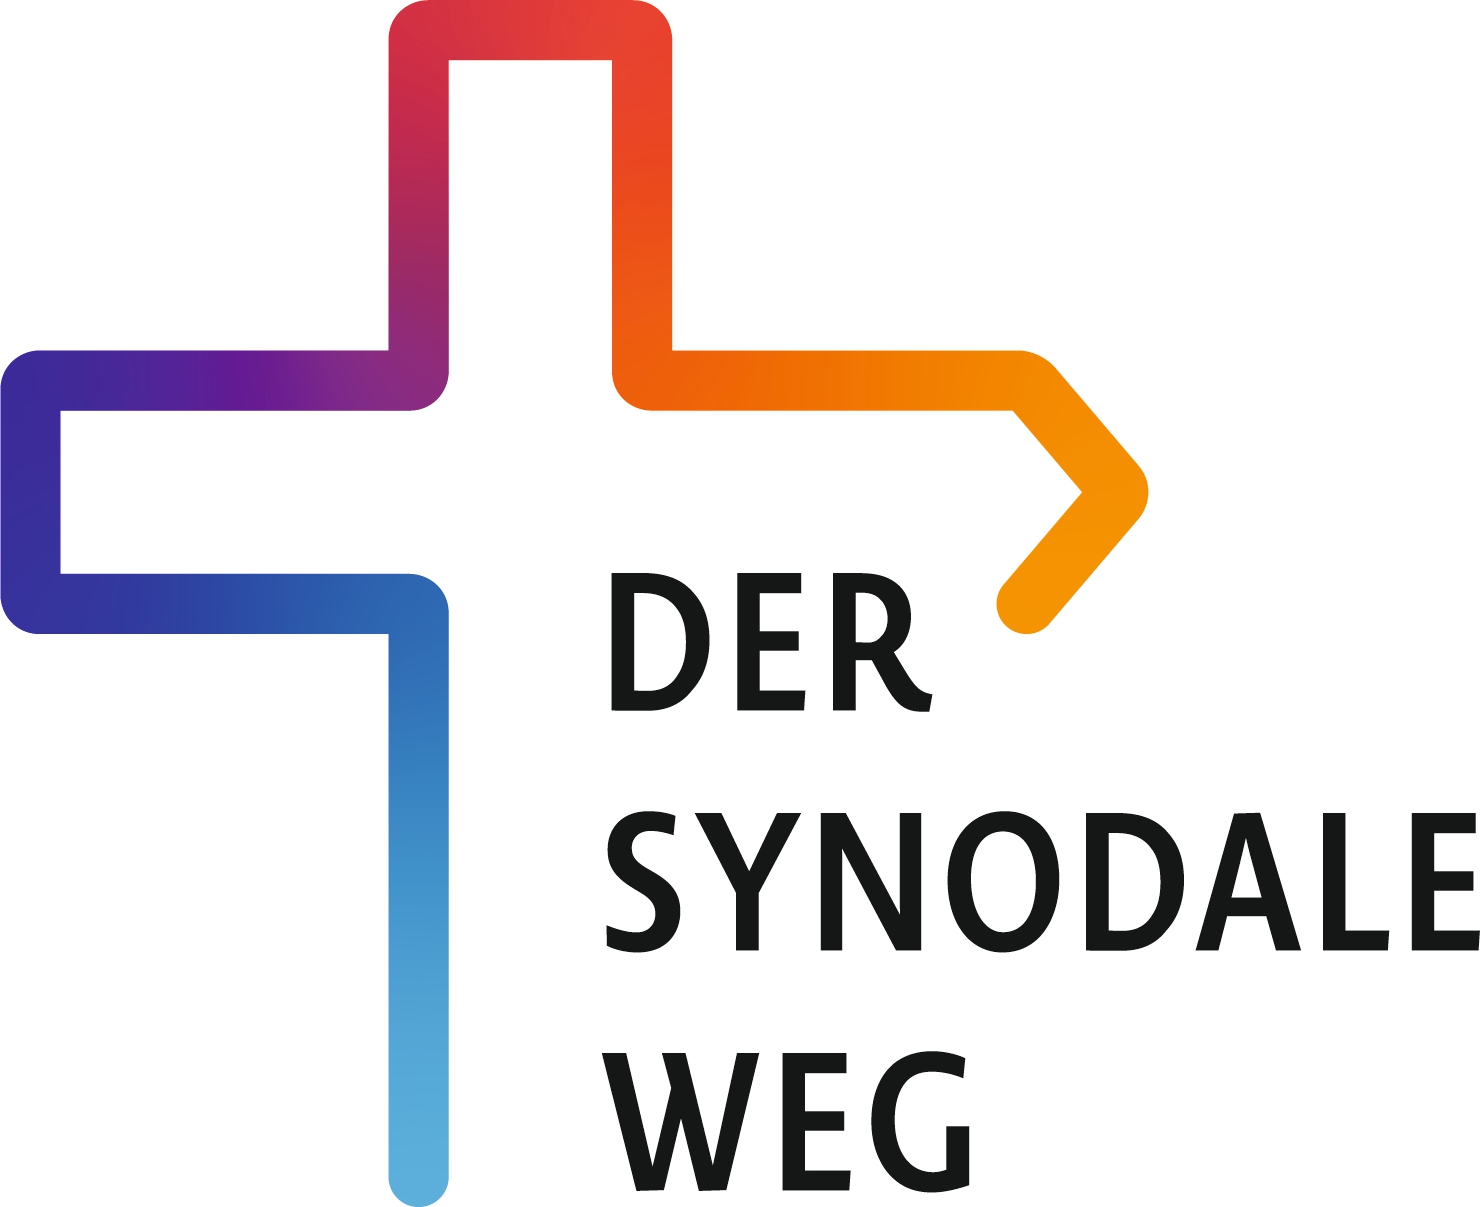 Der Synodale Weg (c) pfarrriefservice.de